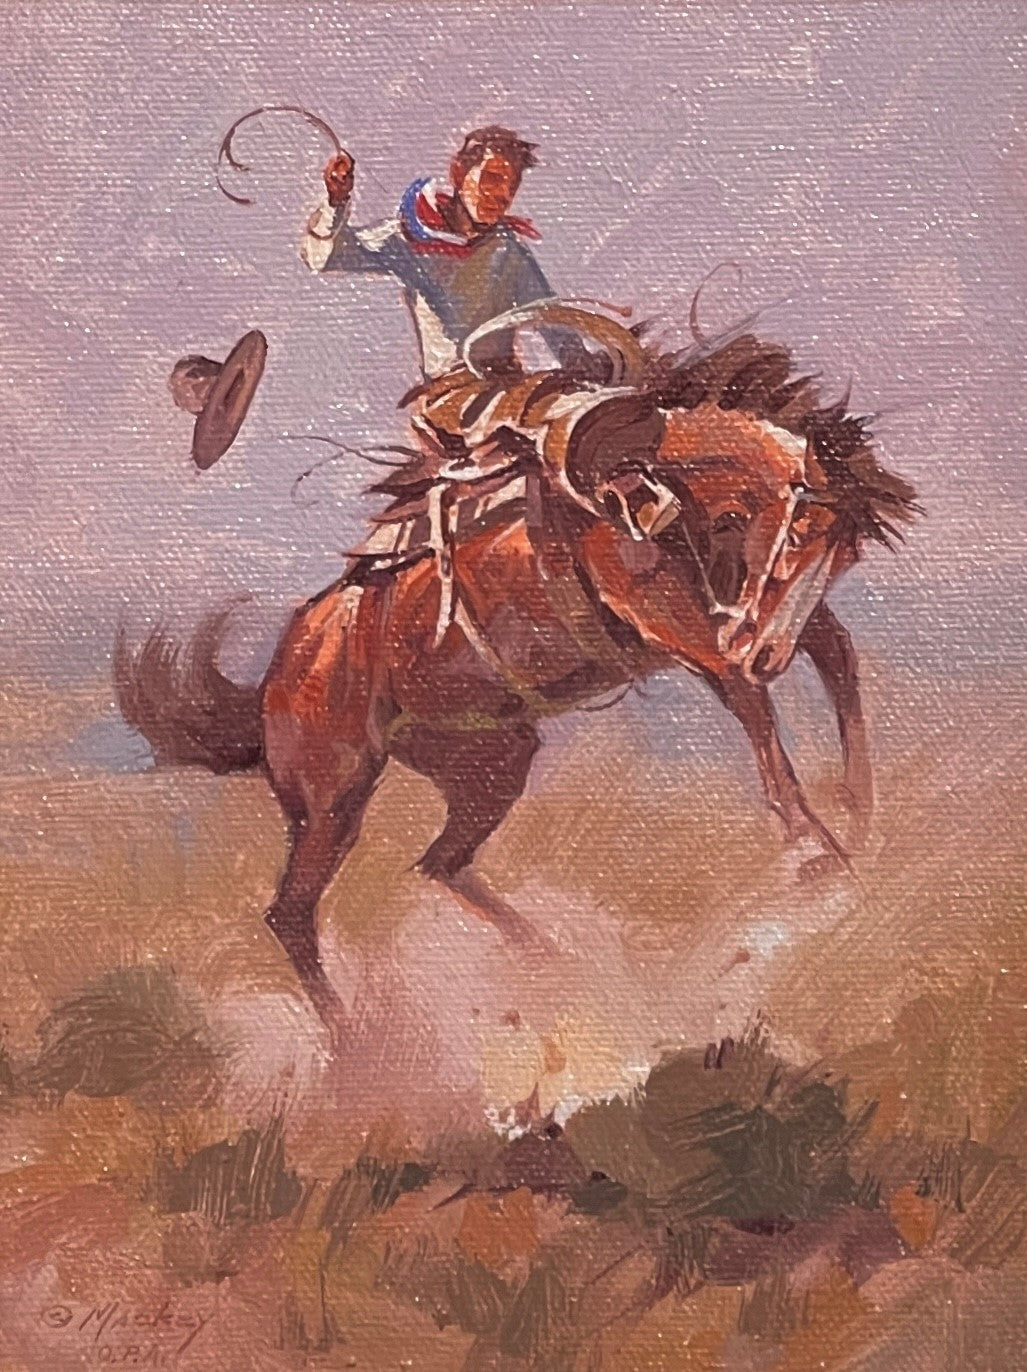 An artist creates a stunning oil painting of a cowboy riding a horse on a dusty Kim Mackey - "Dusty Duel".